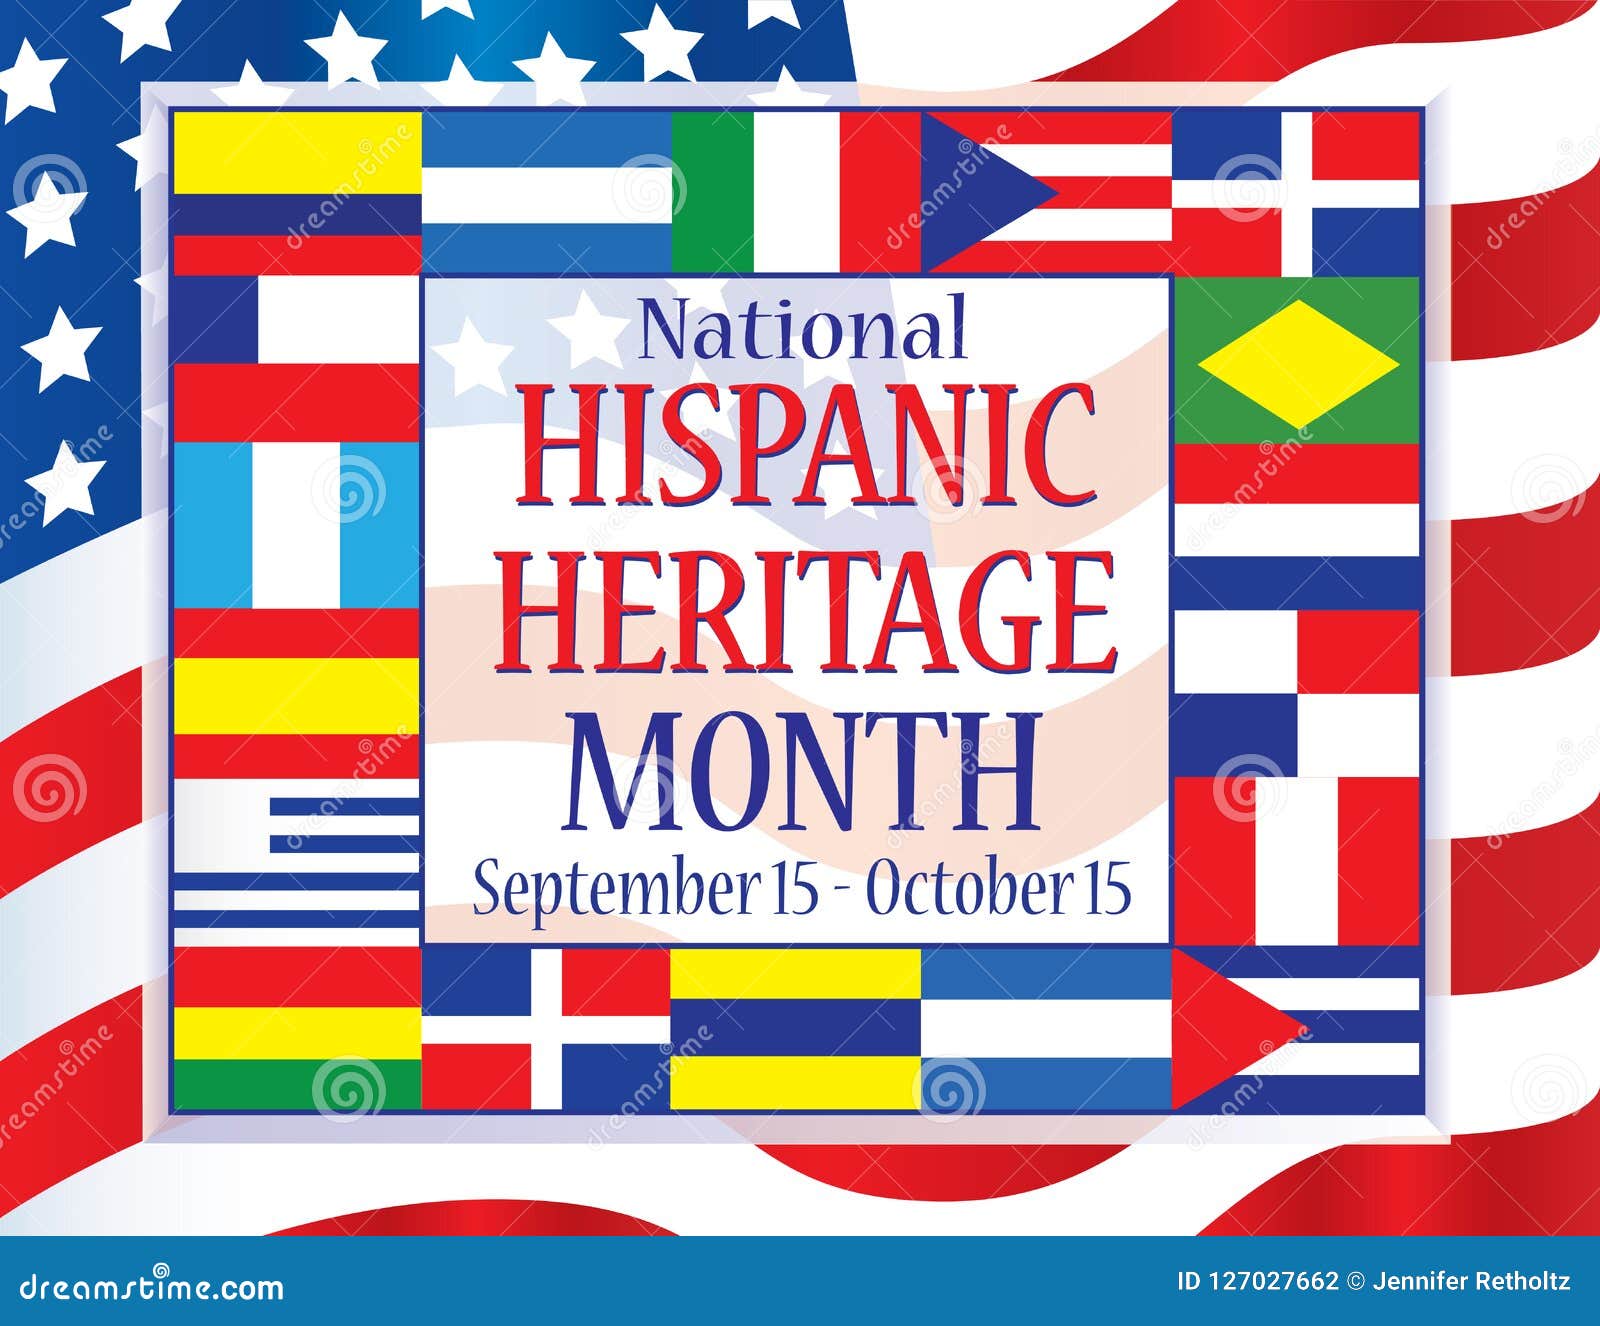 national hispanic heritage month september 15 - october 15